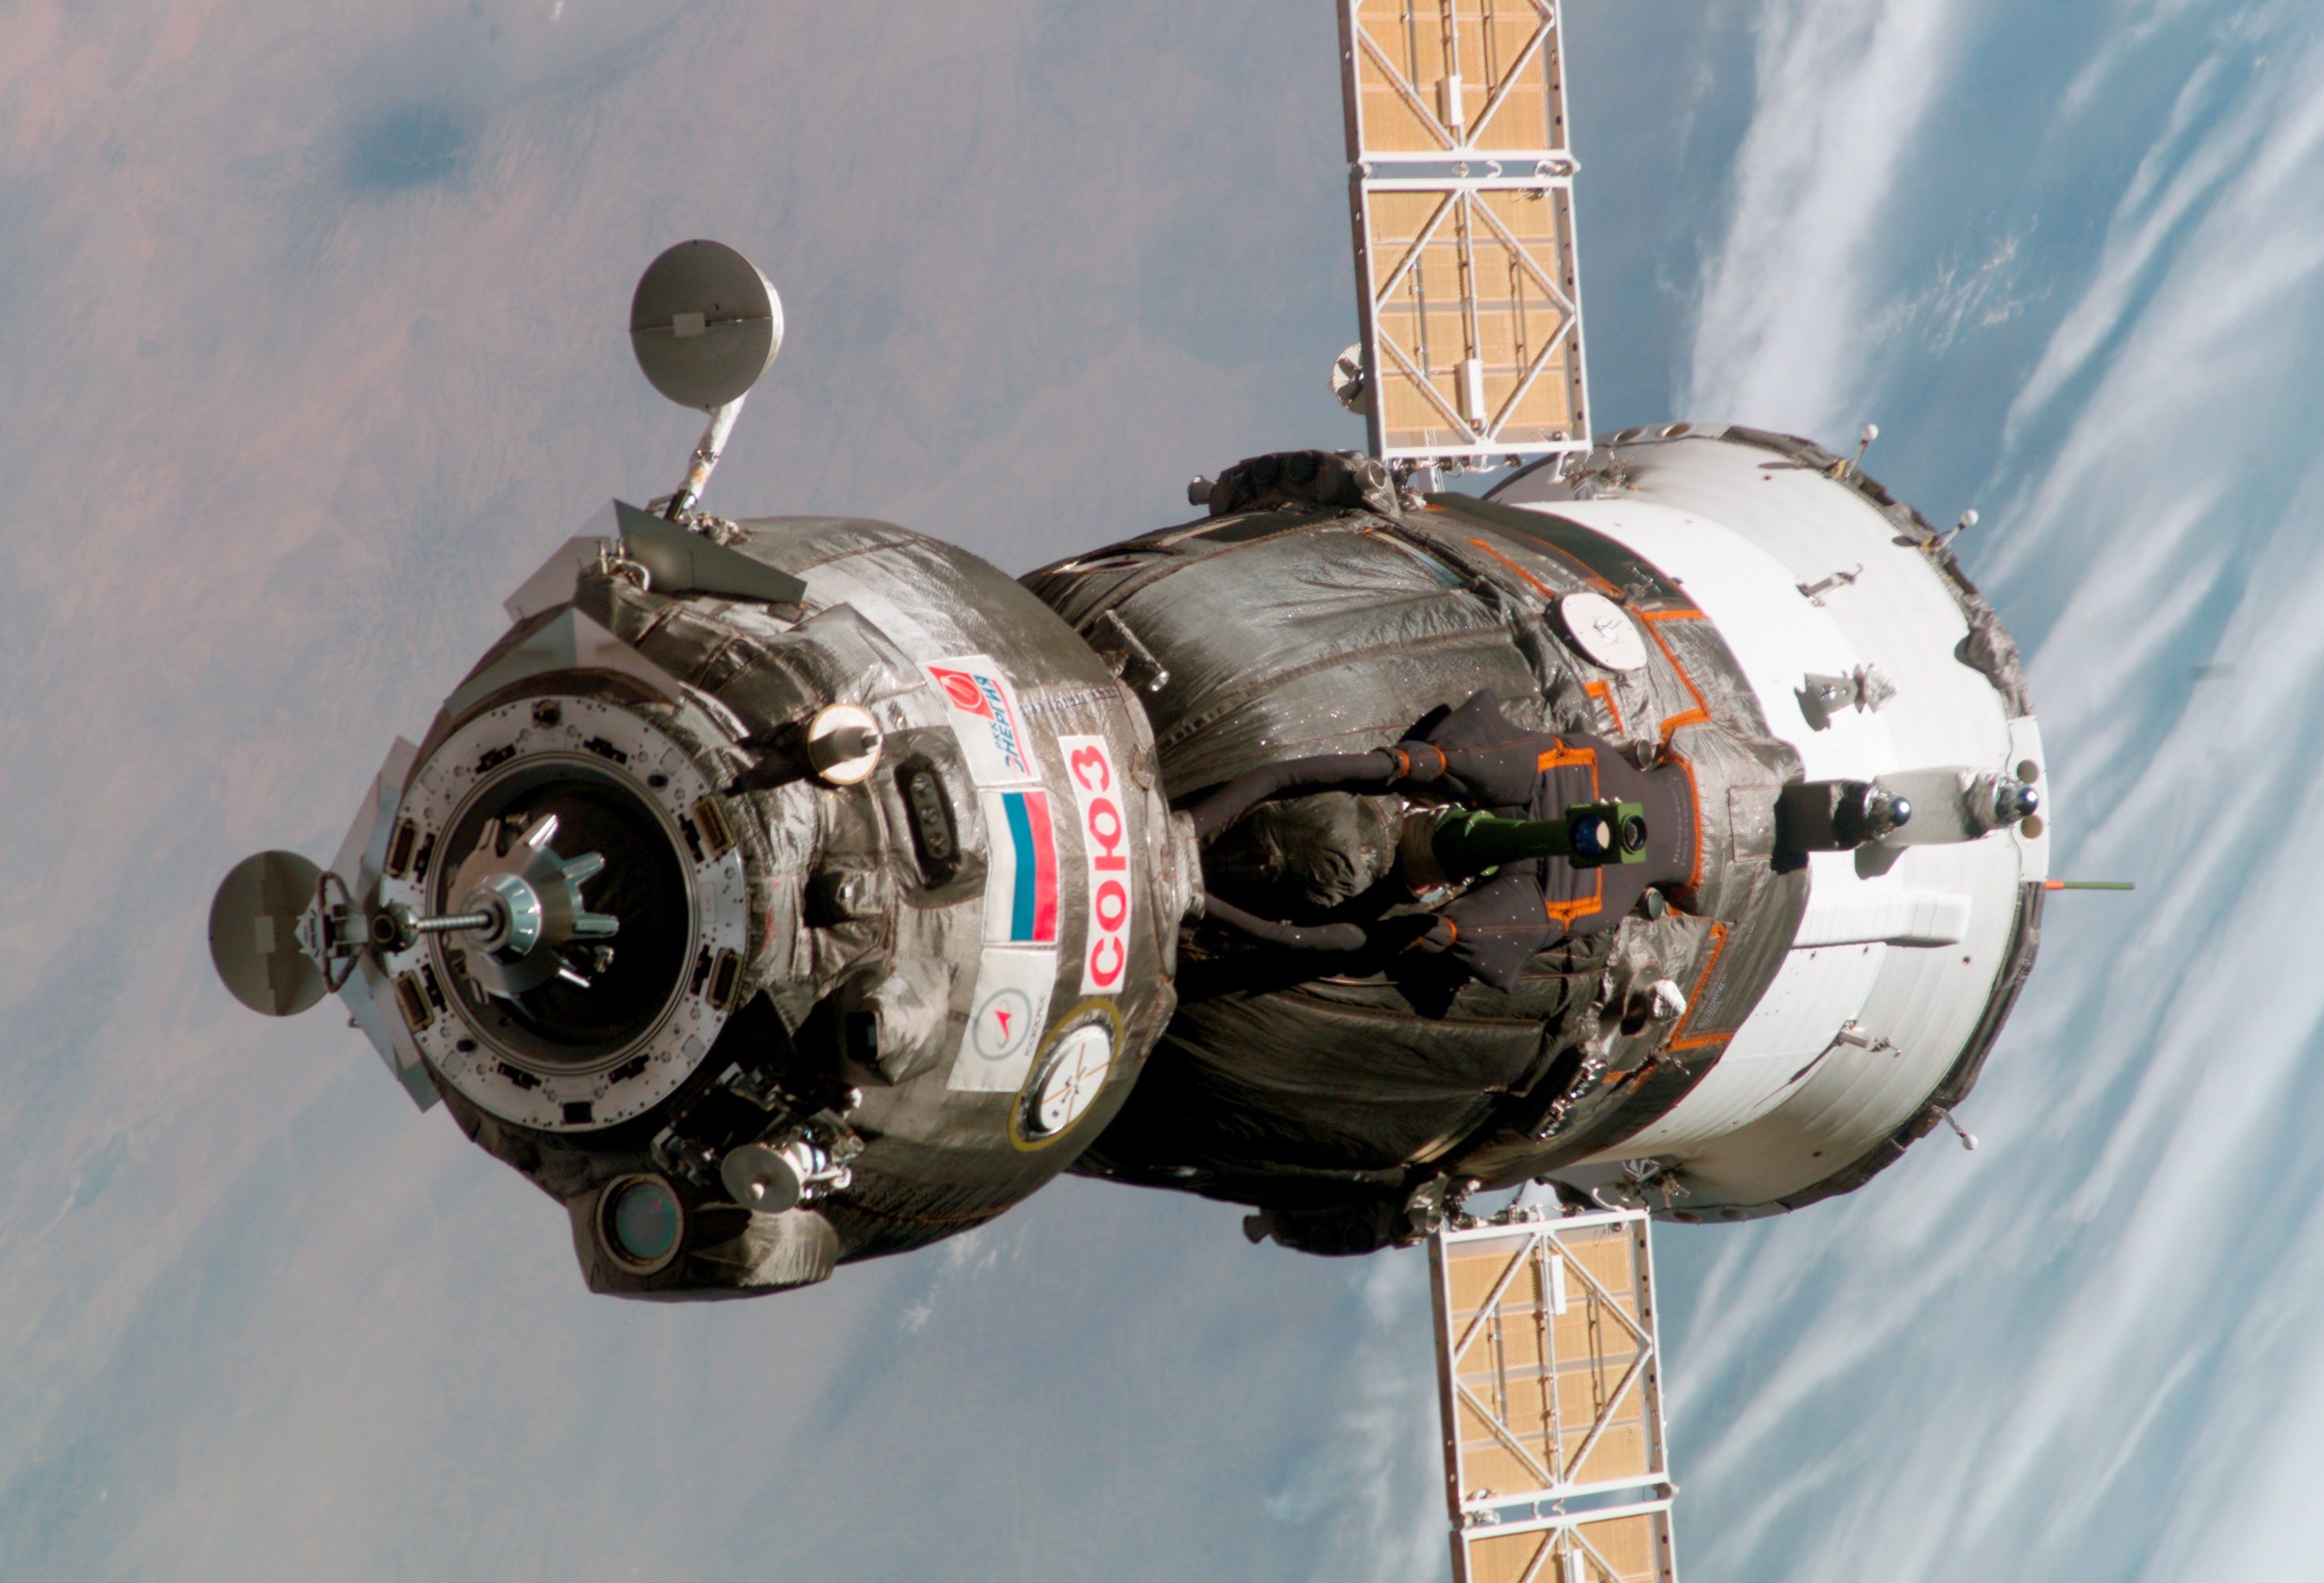 http://upload.wikimedia.org/wikipedia/commons/7/70/Soyuz_TMA-6_spacecraft.jpg